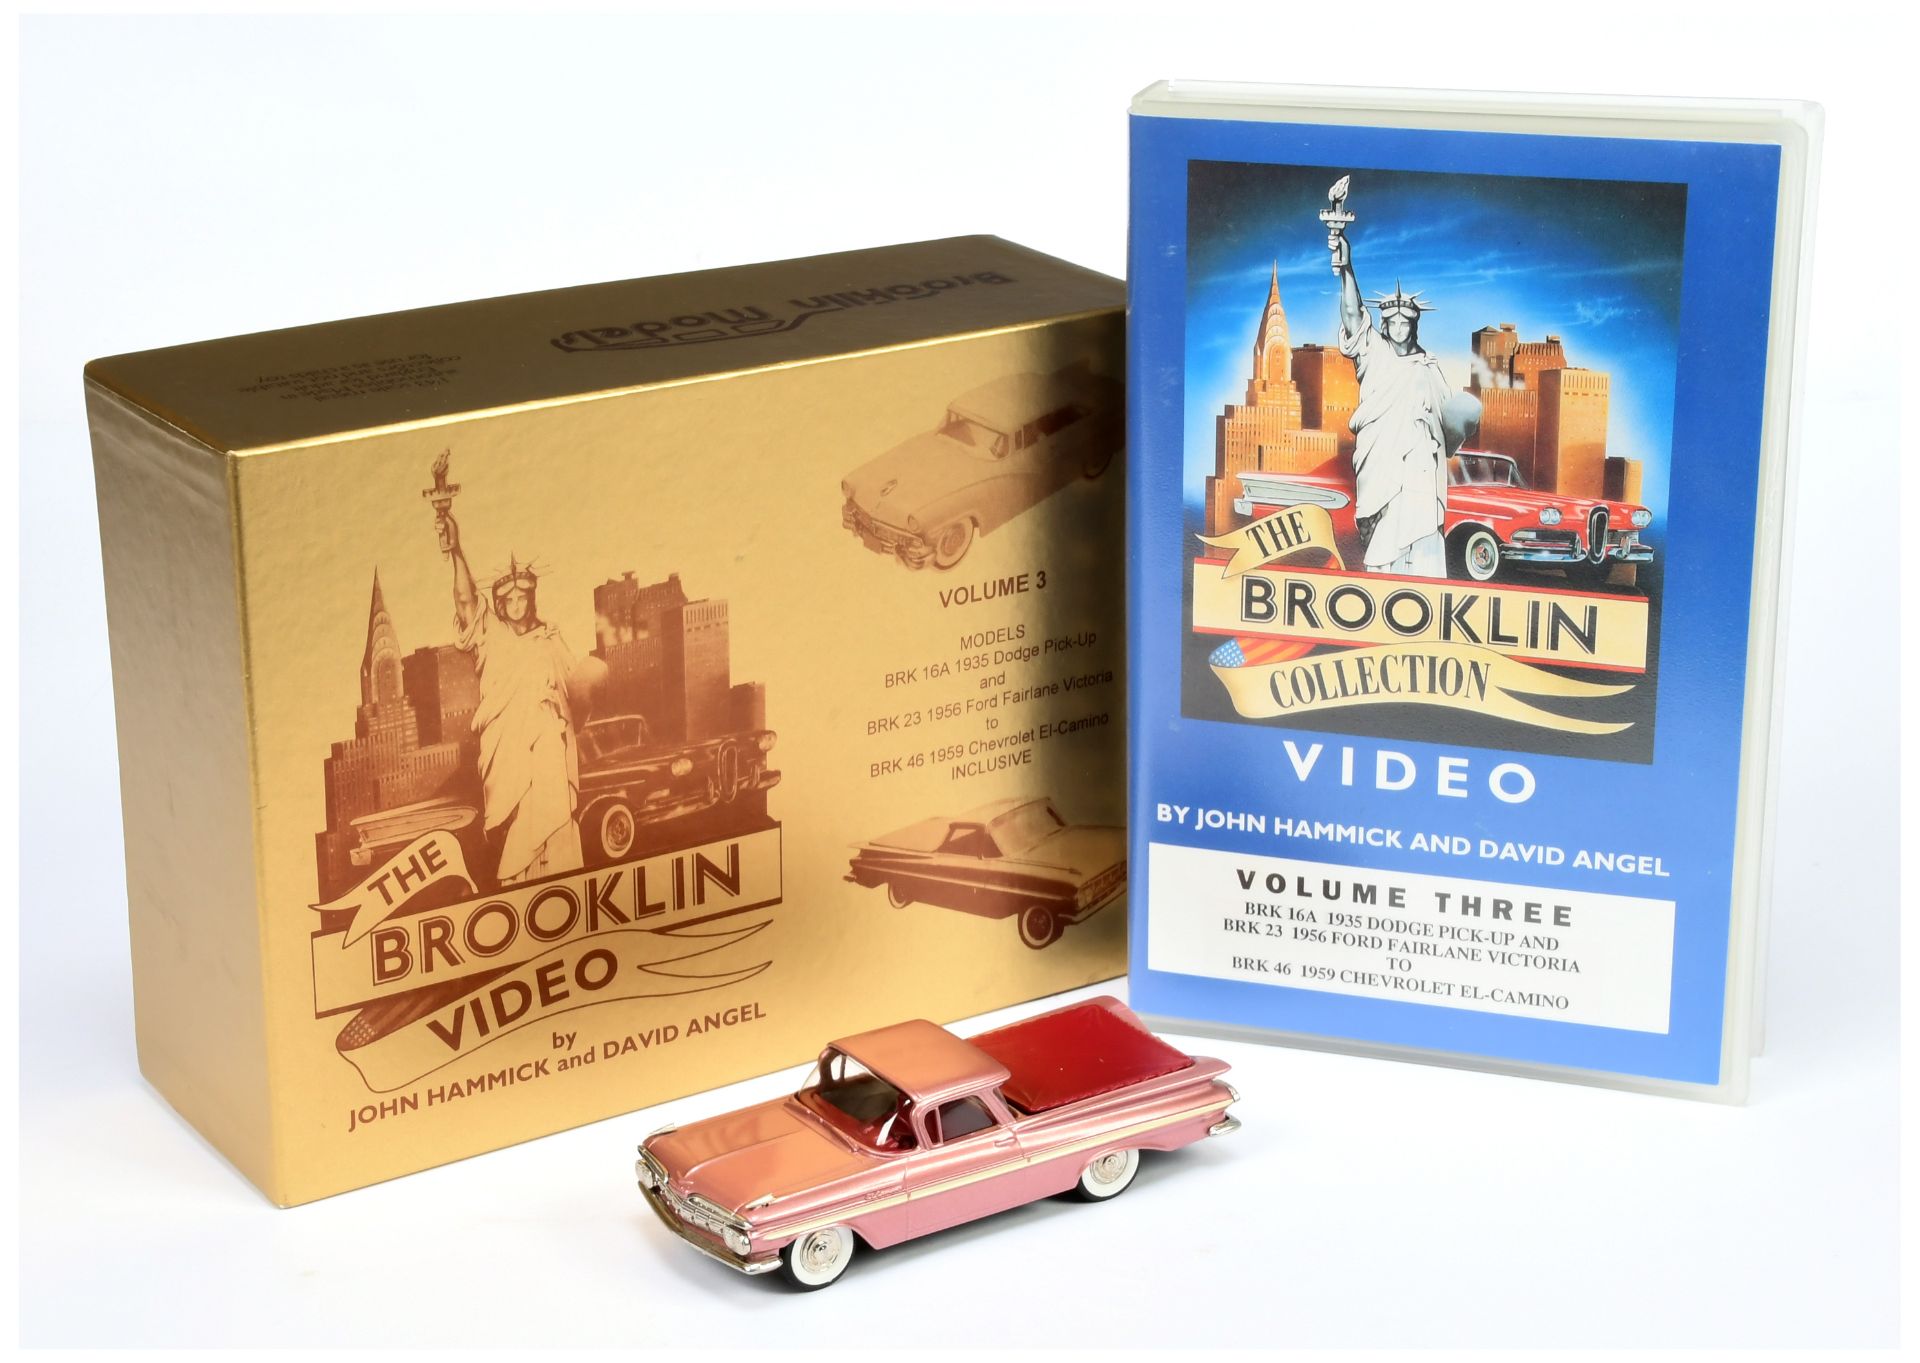 The Brooklin Video by John Hammick and David Angel 